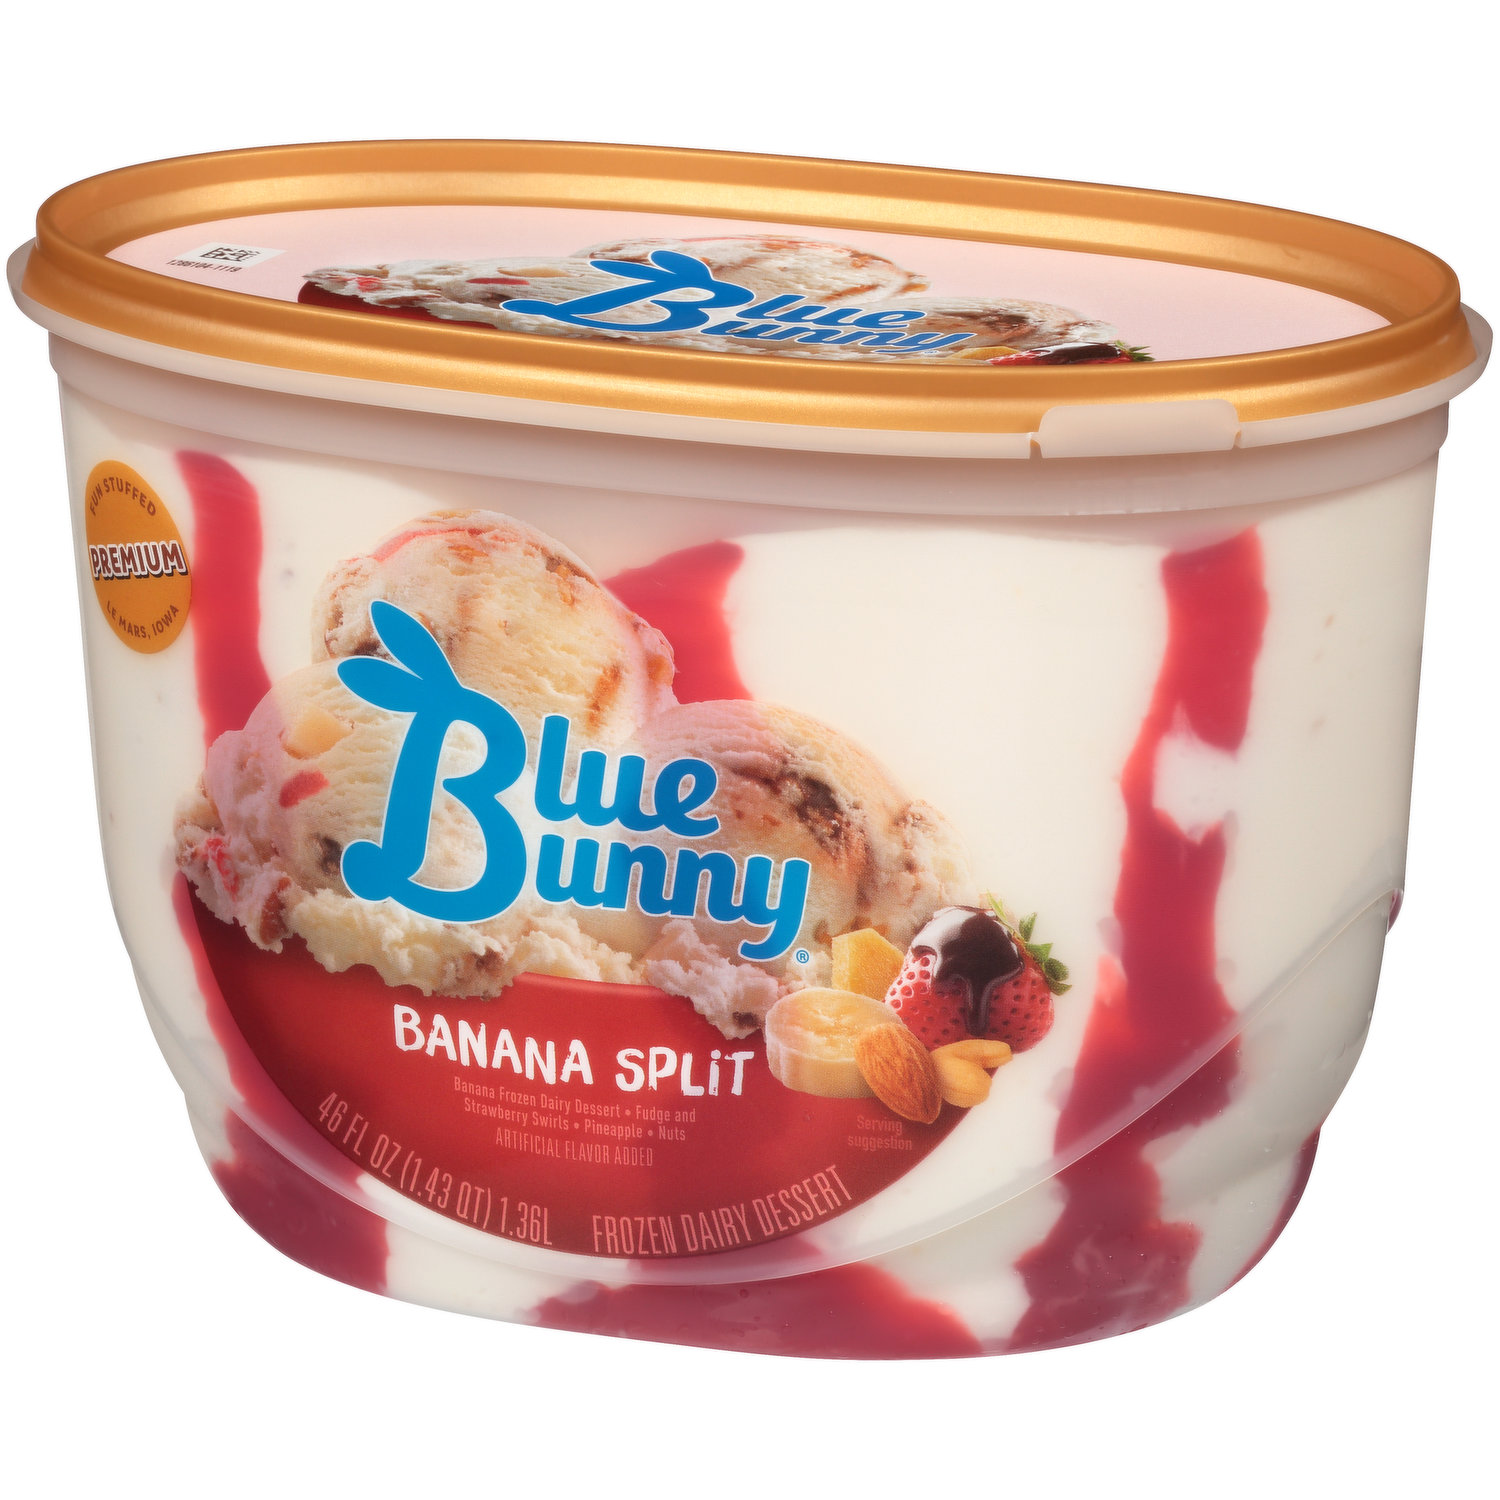 Play Dough – Swirl of banana, cherry, and blue moon ice creams